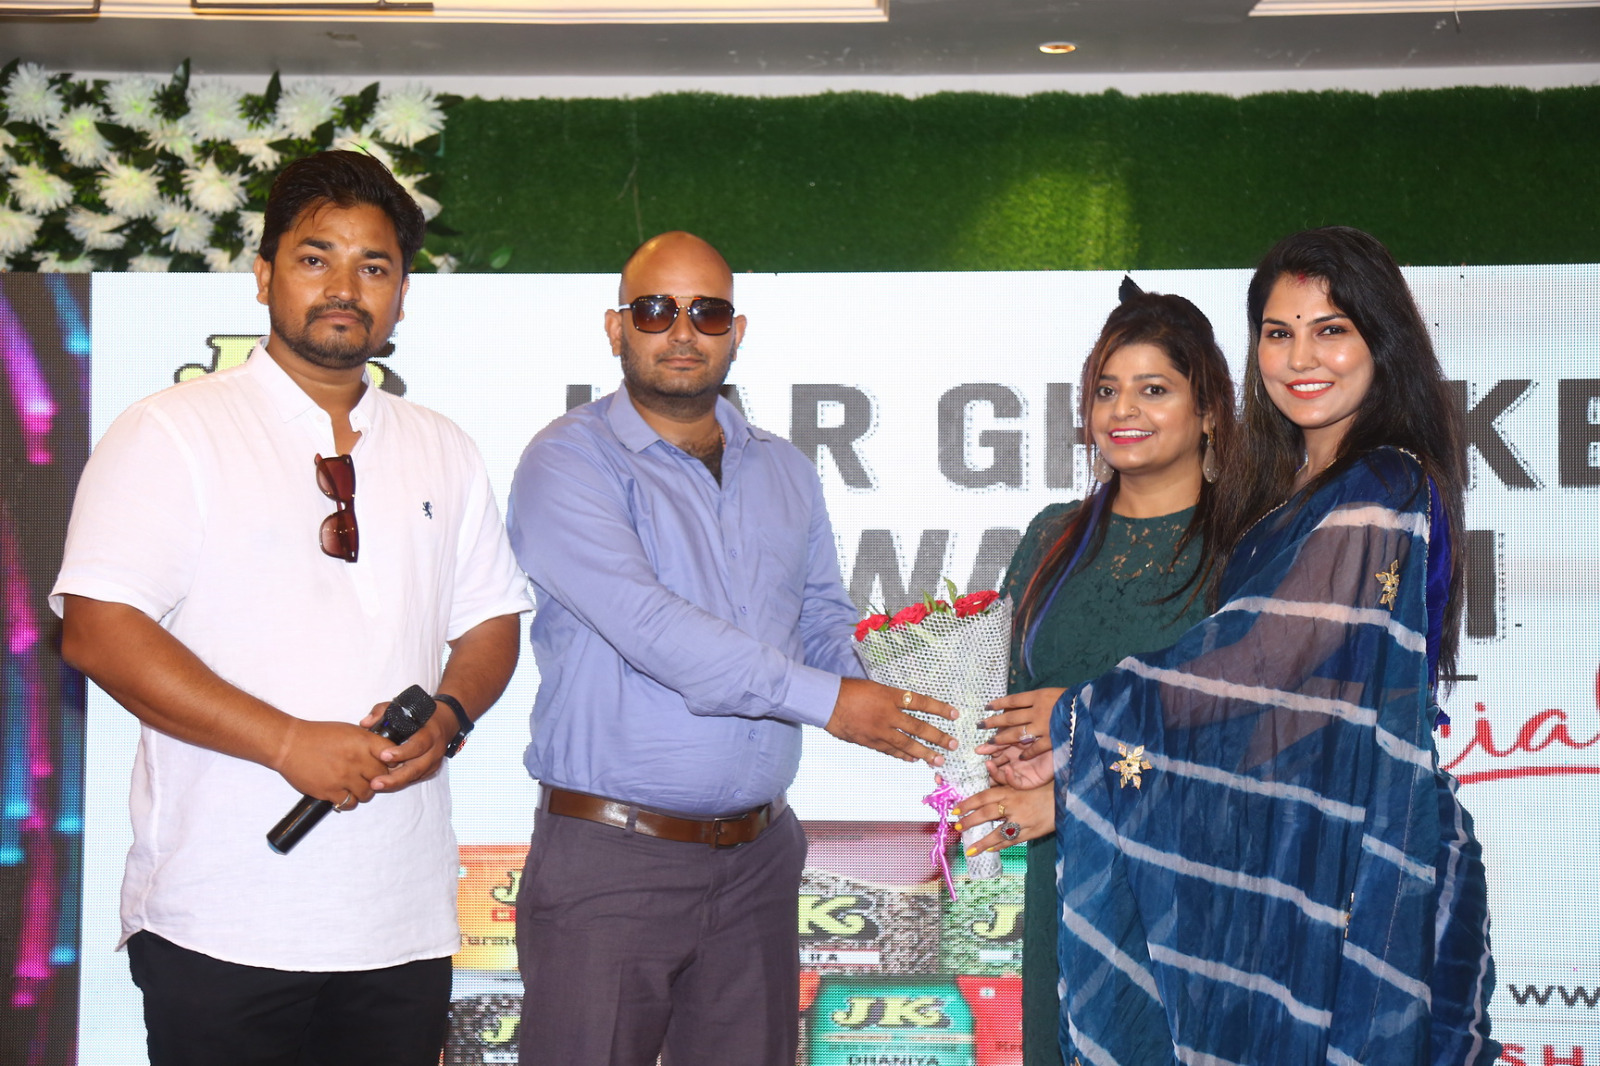 Cultural National Award Winner 2023 - Ramniwas Choudhary